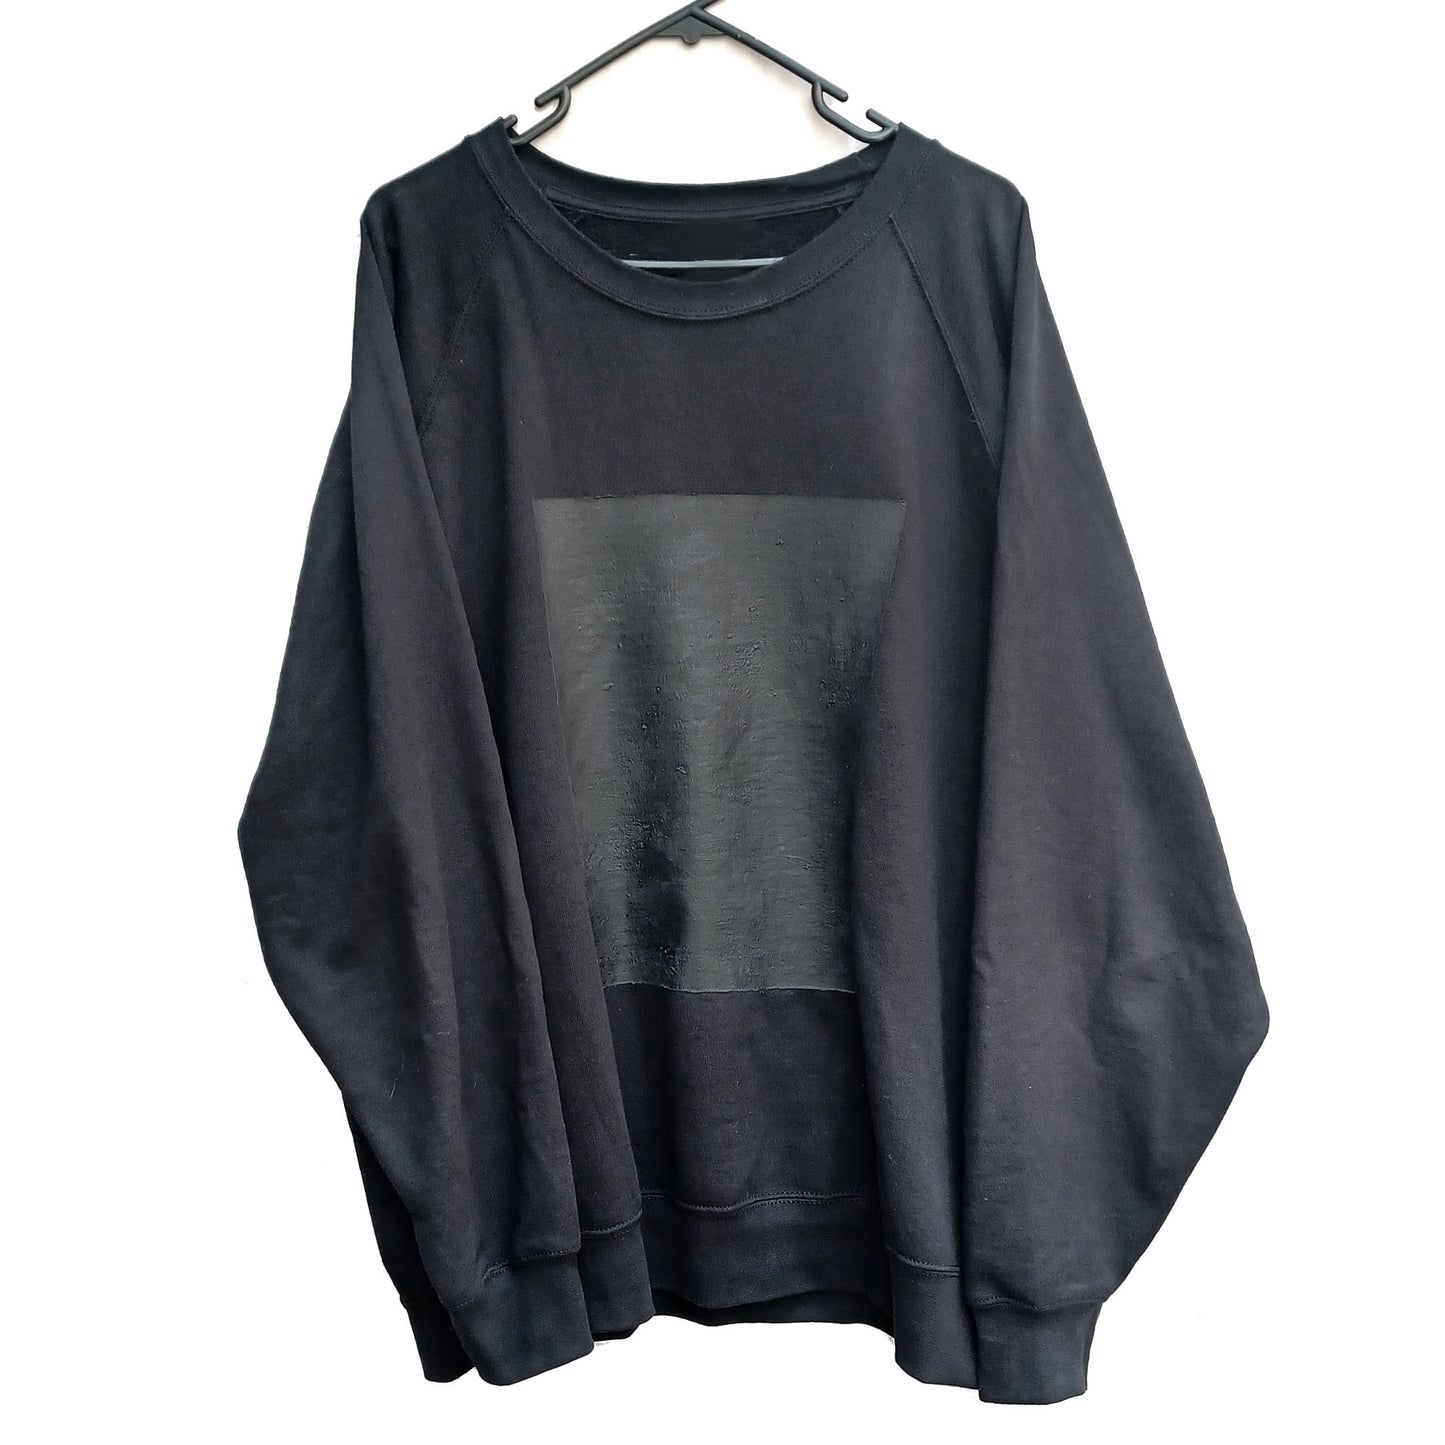 Black raglan sleeve sweatshirt. Latex print